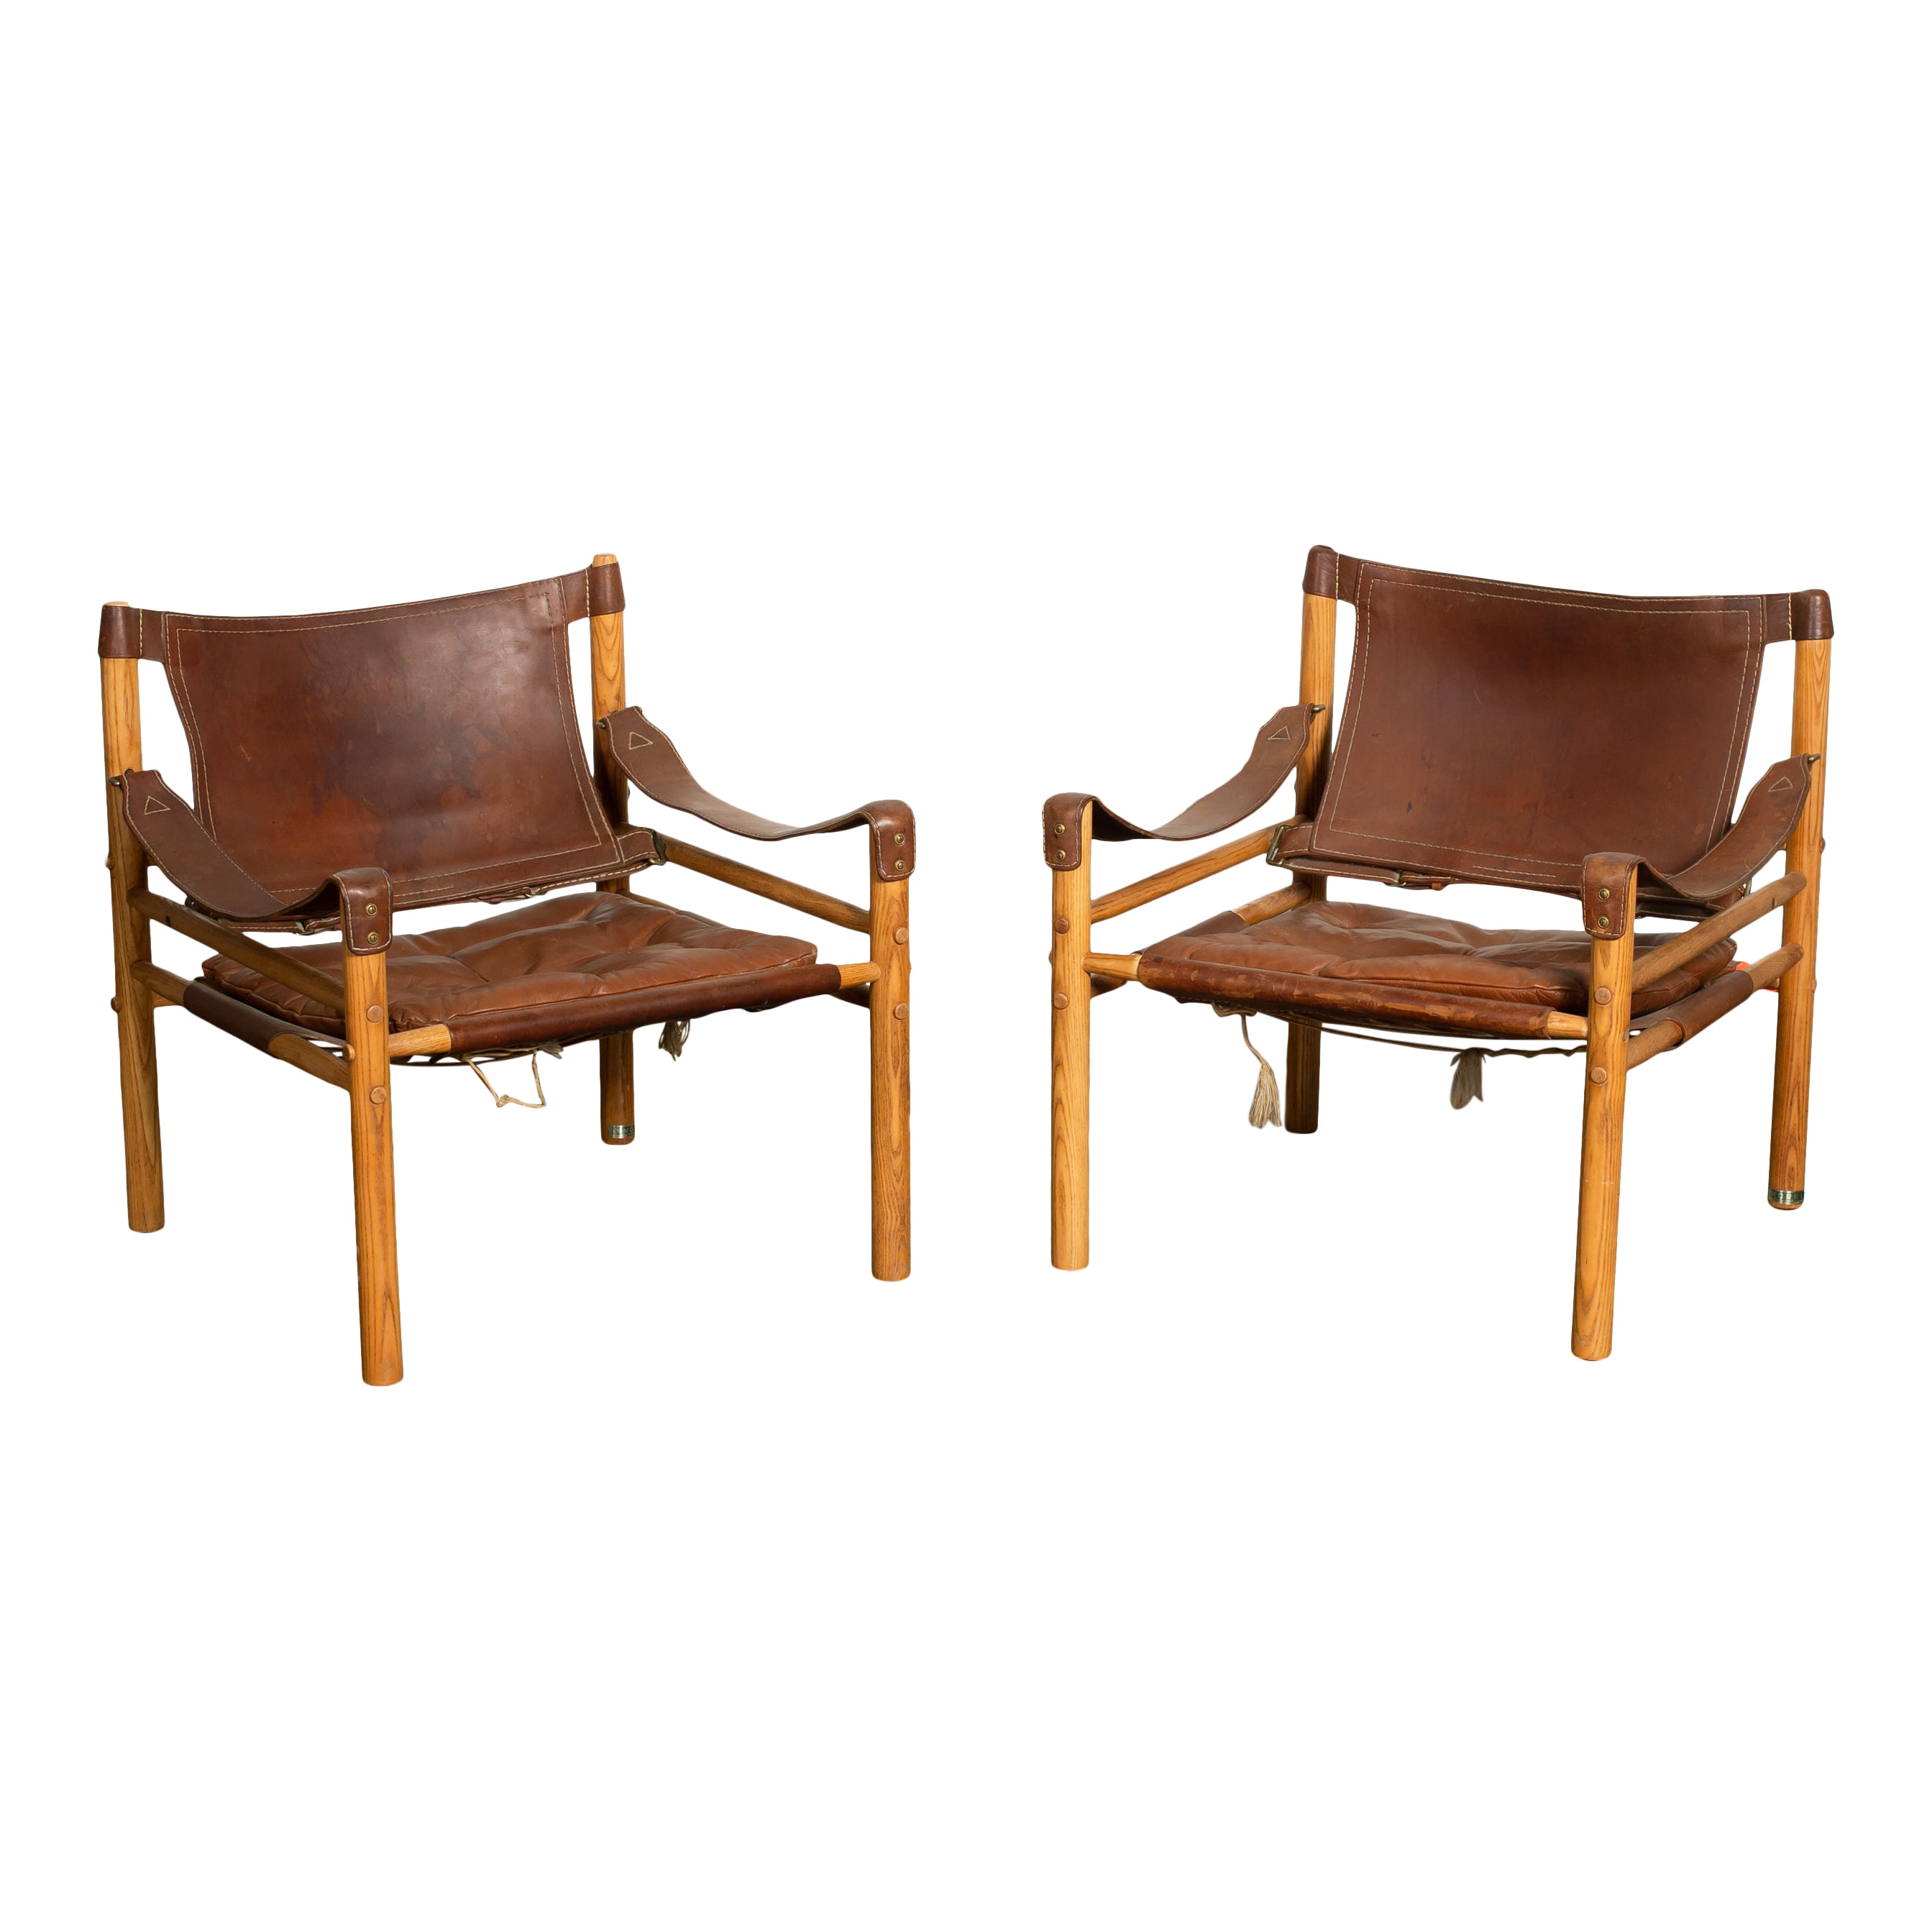 Brantley Leather Chair (Pair)